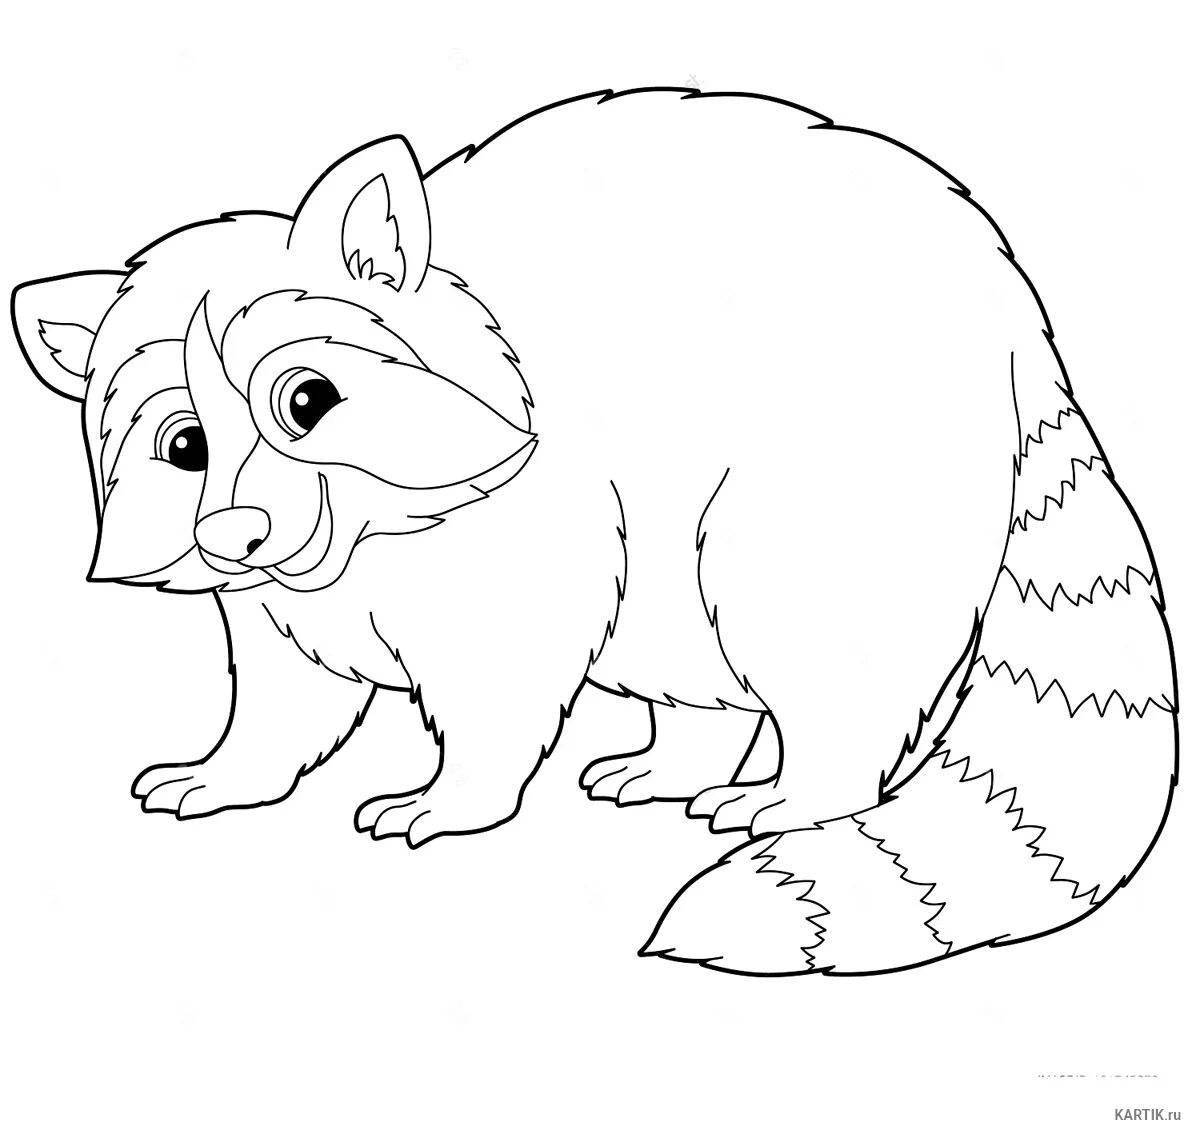 Coloring page joyful raccoon dog